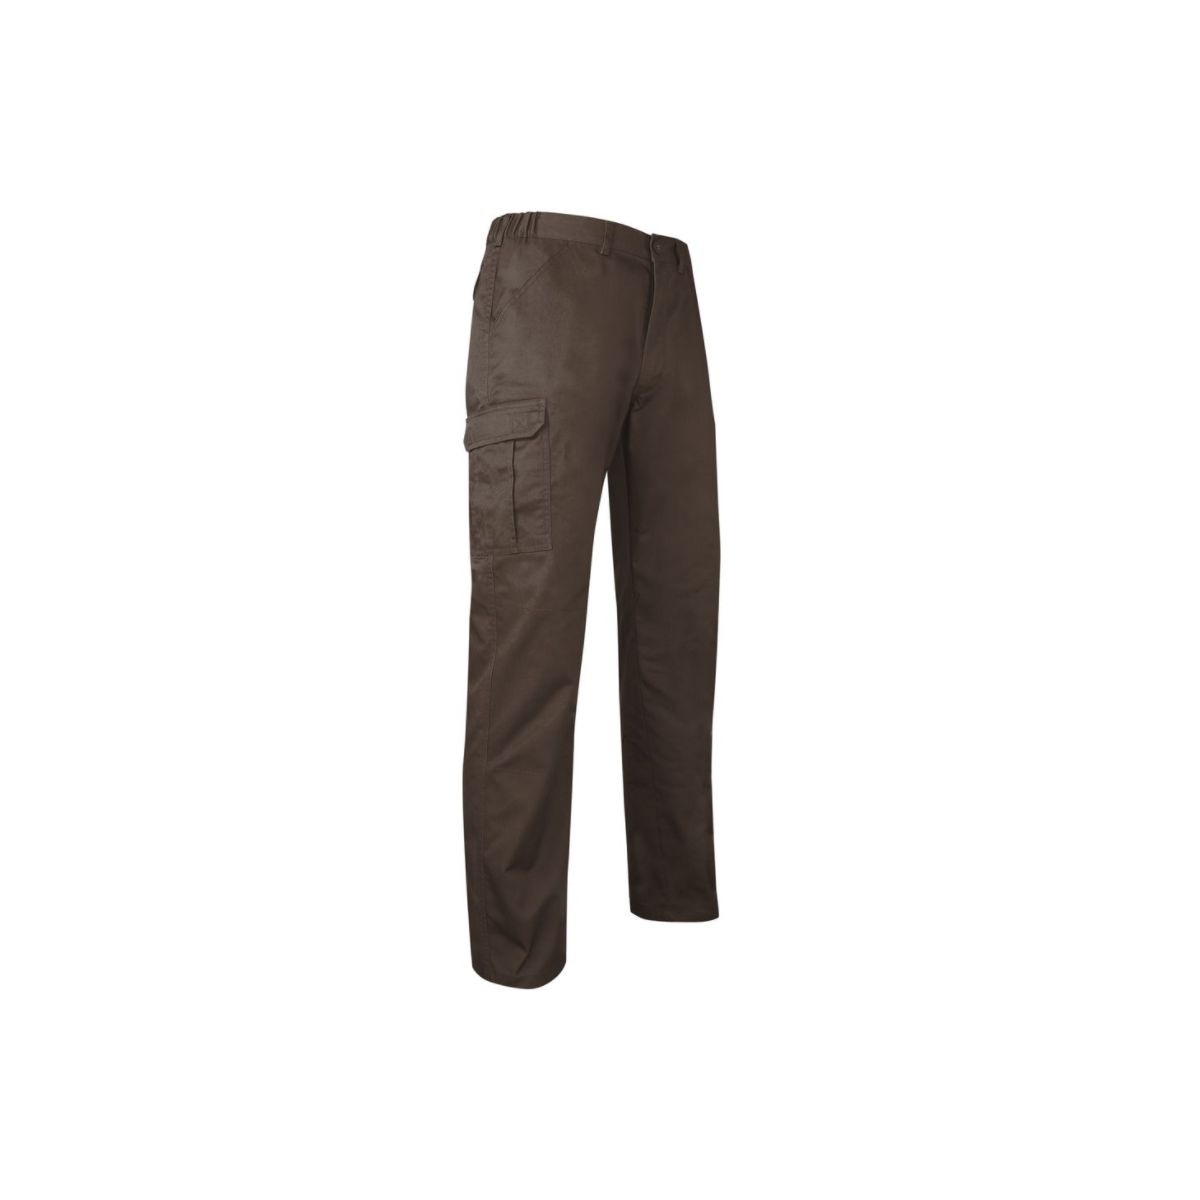 Pantalon de travail DAIM multipoches marron - LMA - Taille 38